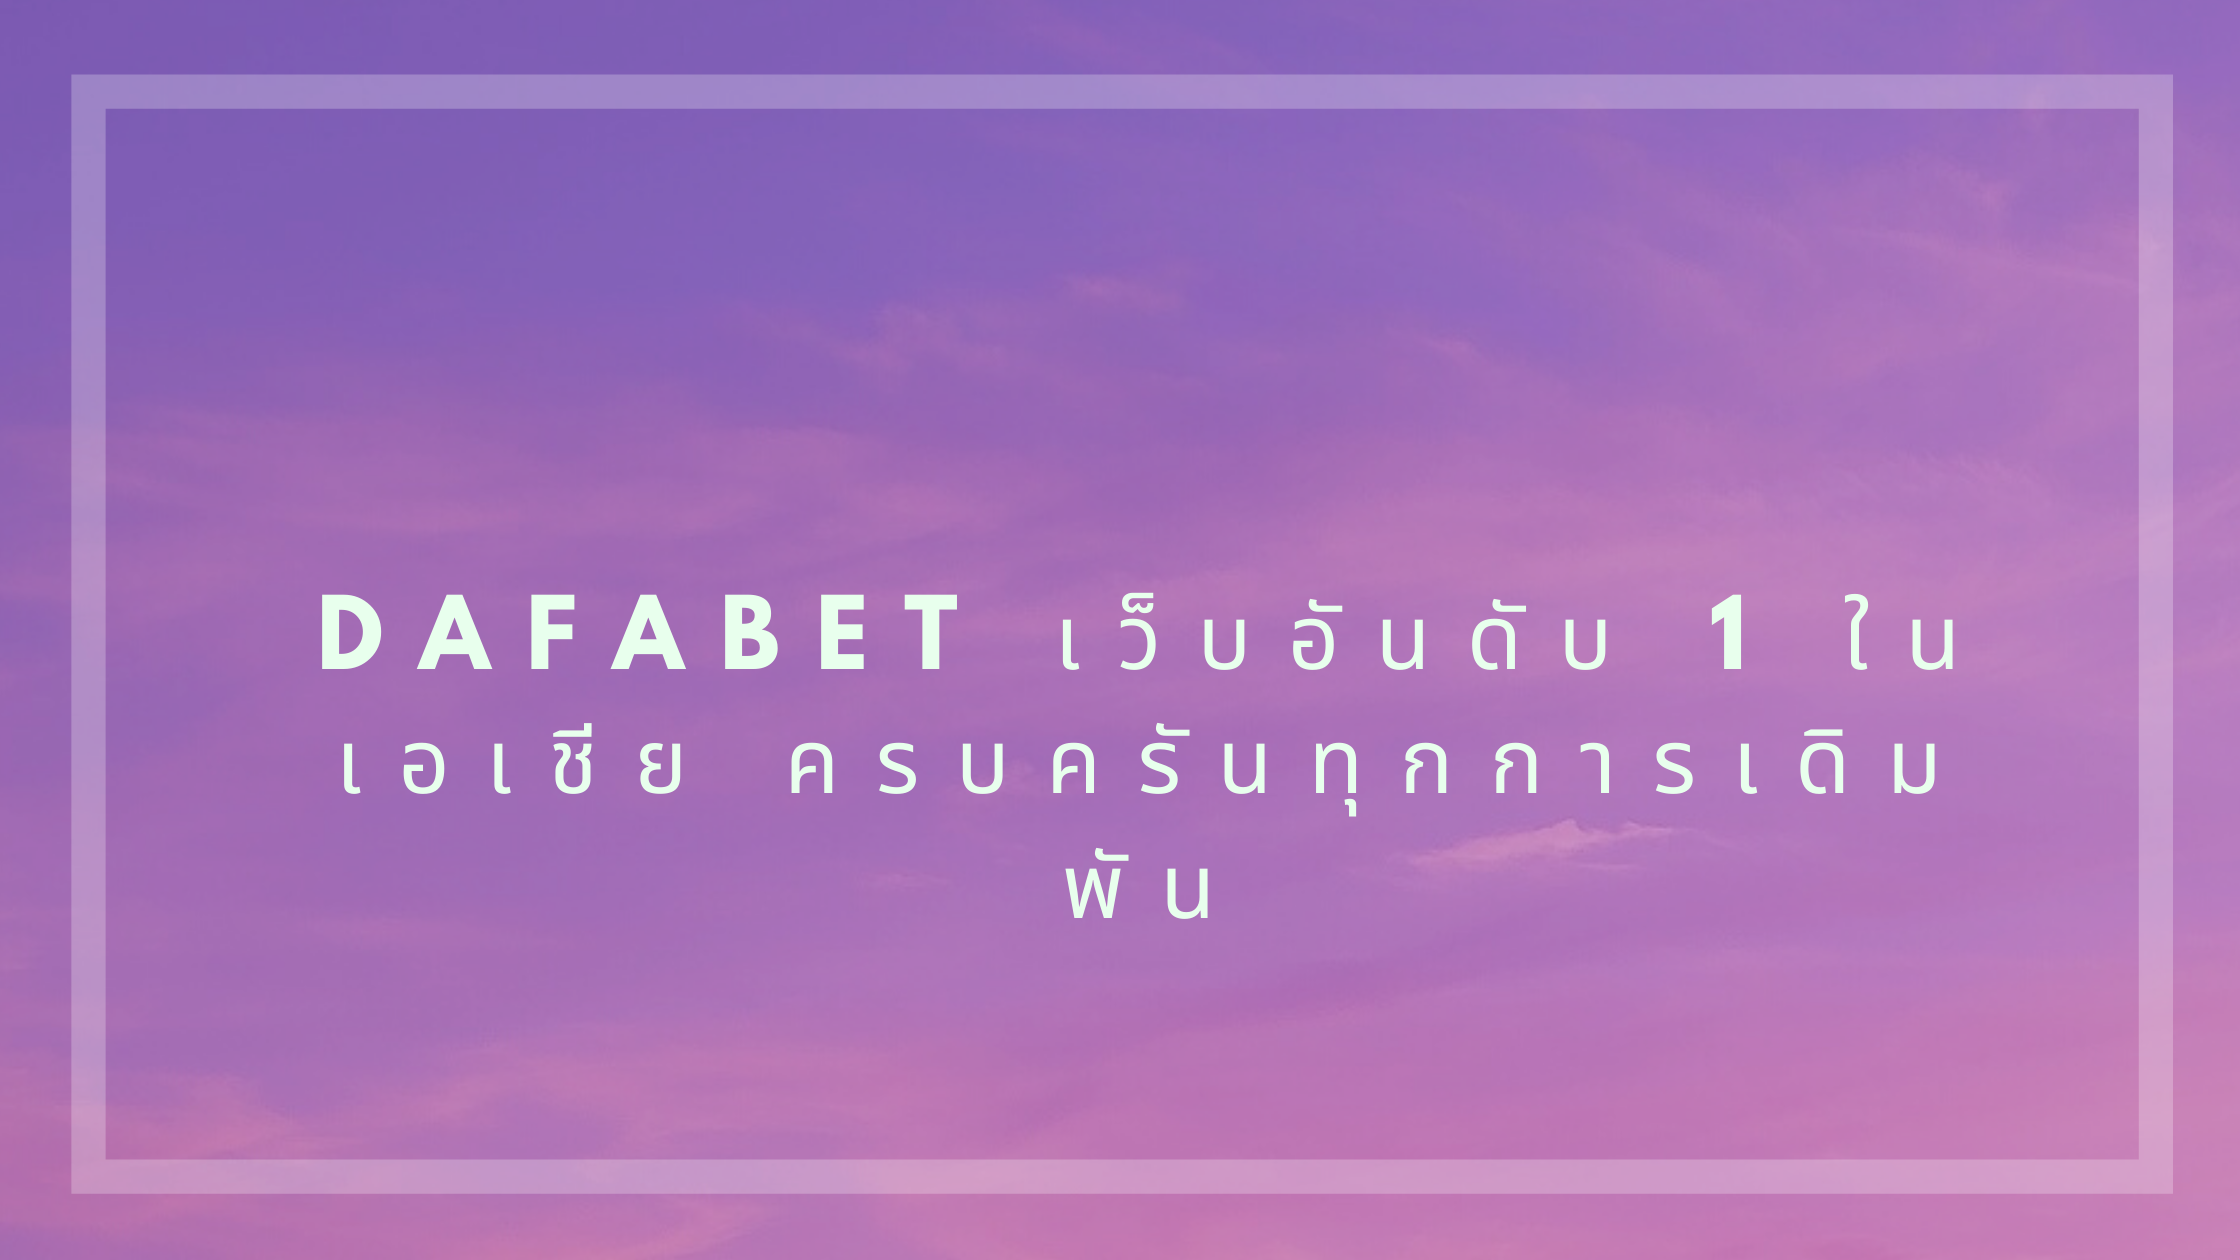 dafabet เว็บอันดับ 1 ในเอเชีย ครบครันทุกการเดิมพัน